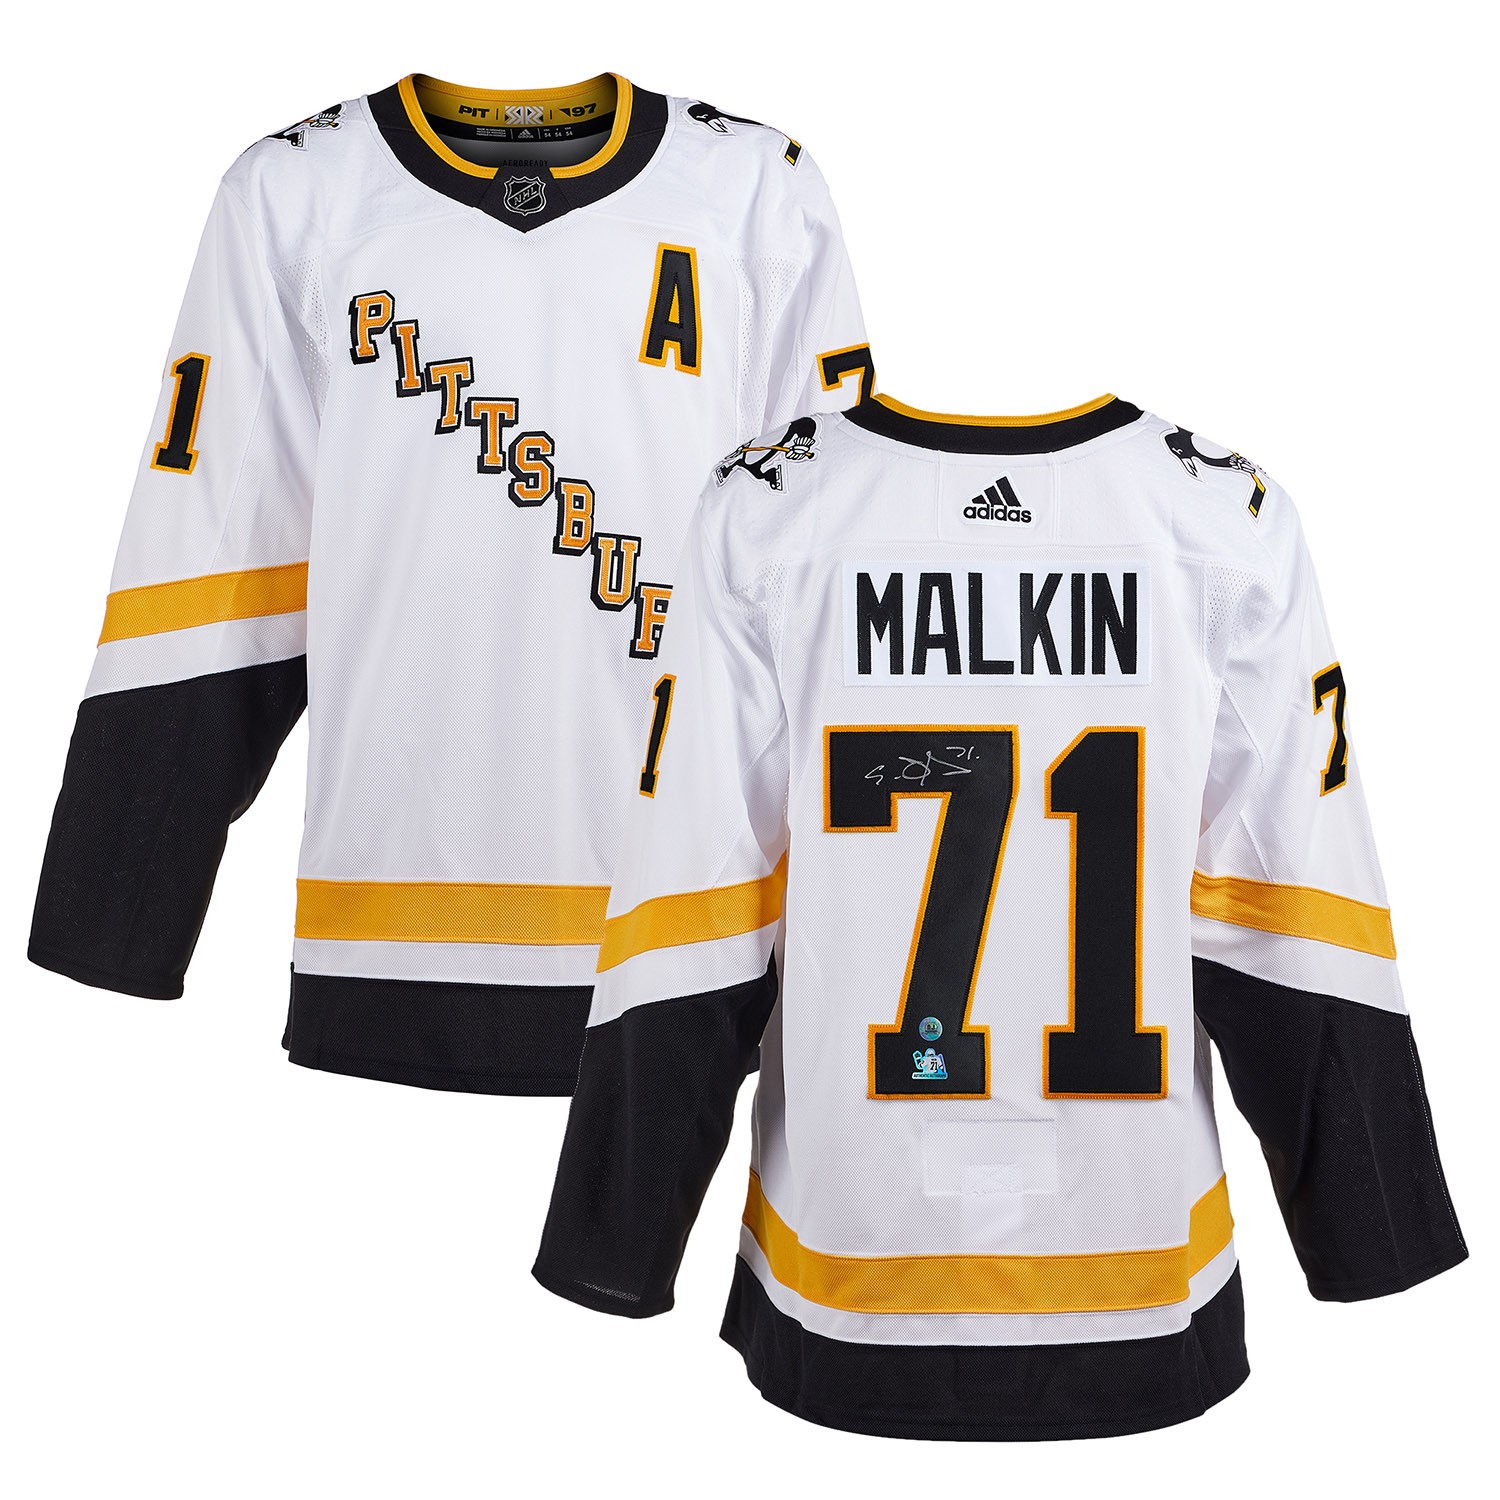 Evgeni Malkin Autographed Signed Pittsburgh Penguins Reverse Retro